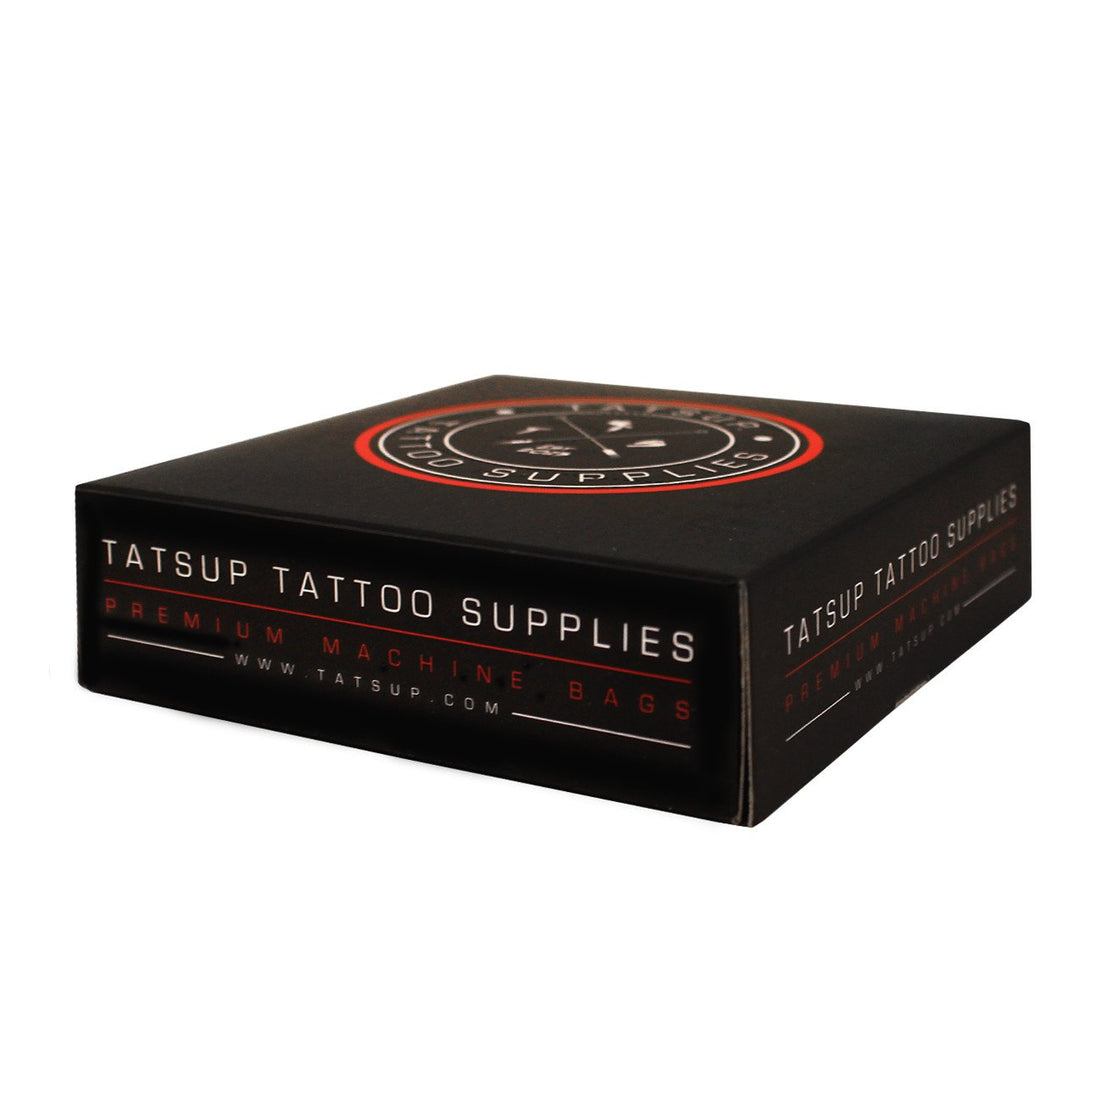 Tatsup Premium Machine Bags Studio Supplies Tatsup 